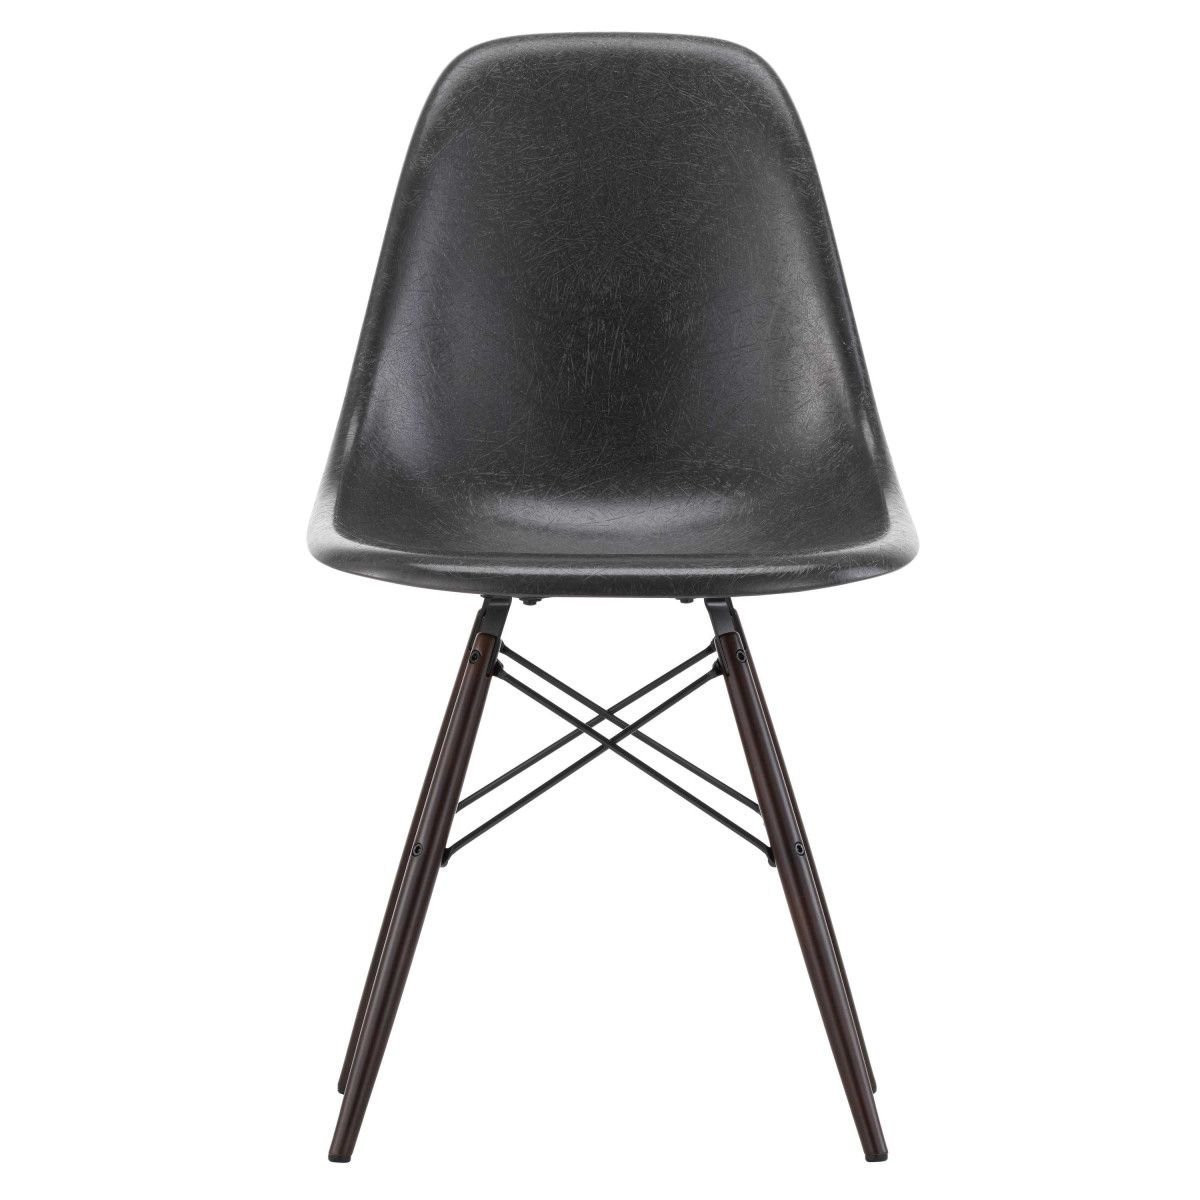 Vitra Eames Fiberglass Chair DSW - Elephant Hide Grey/Esdoorn Donker